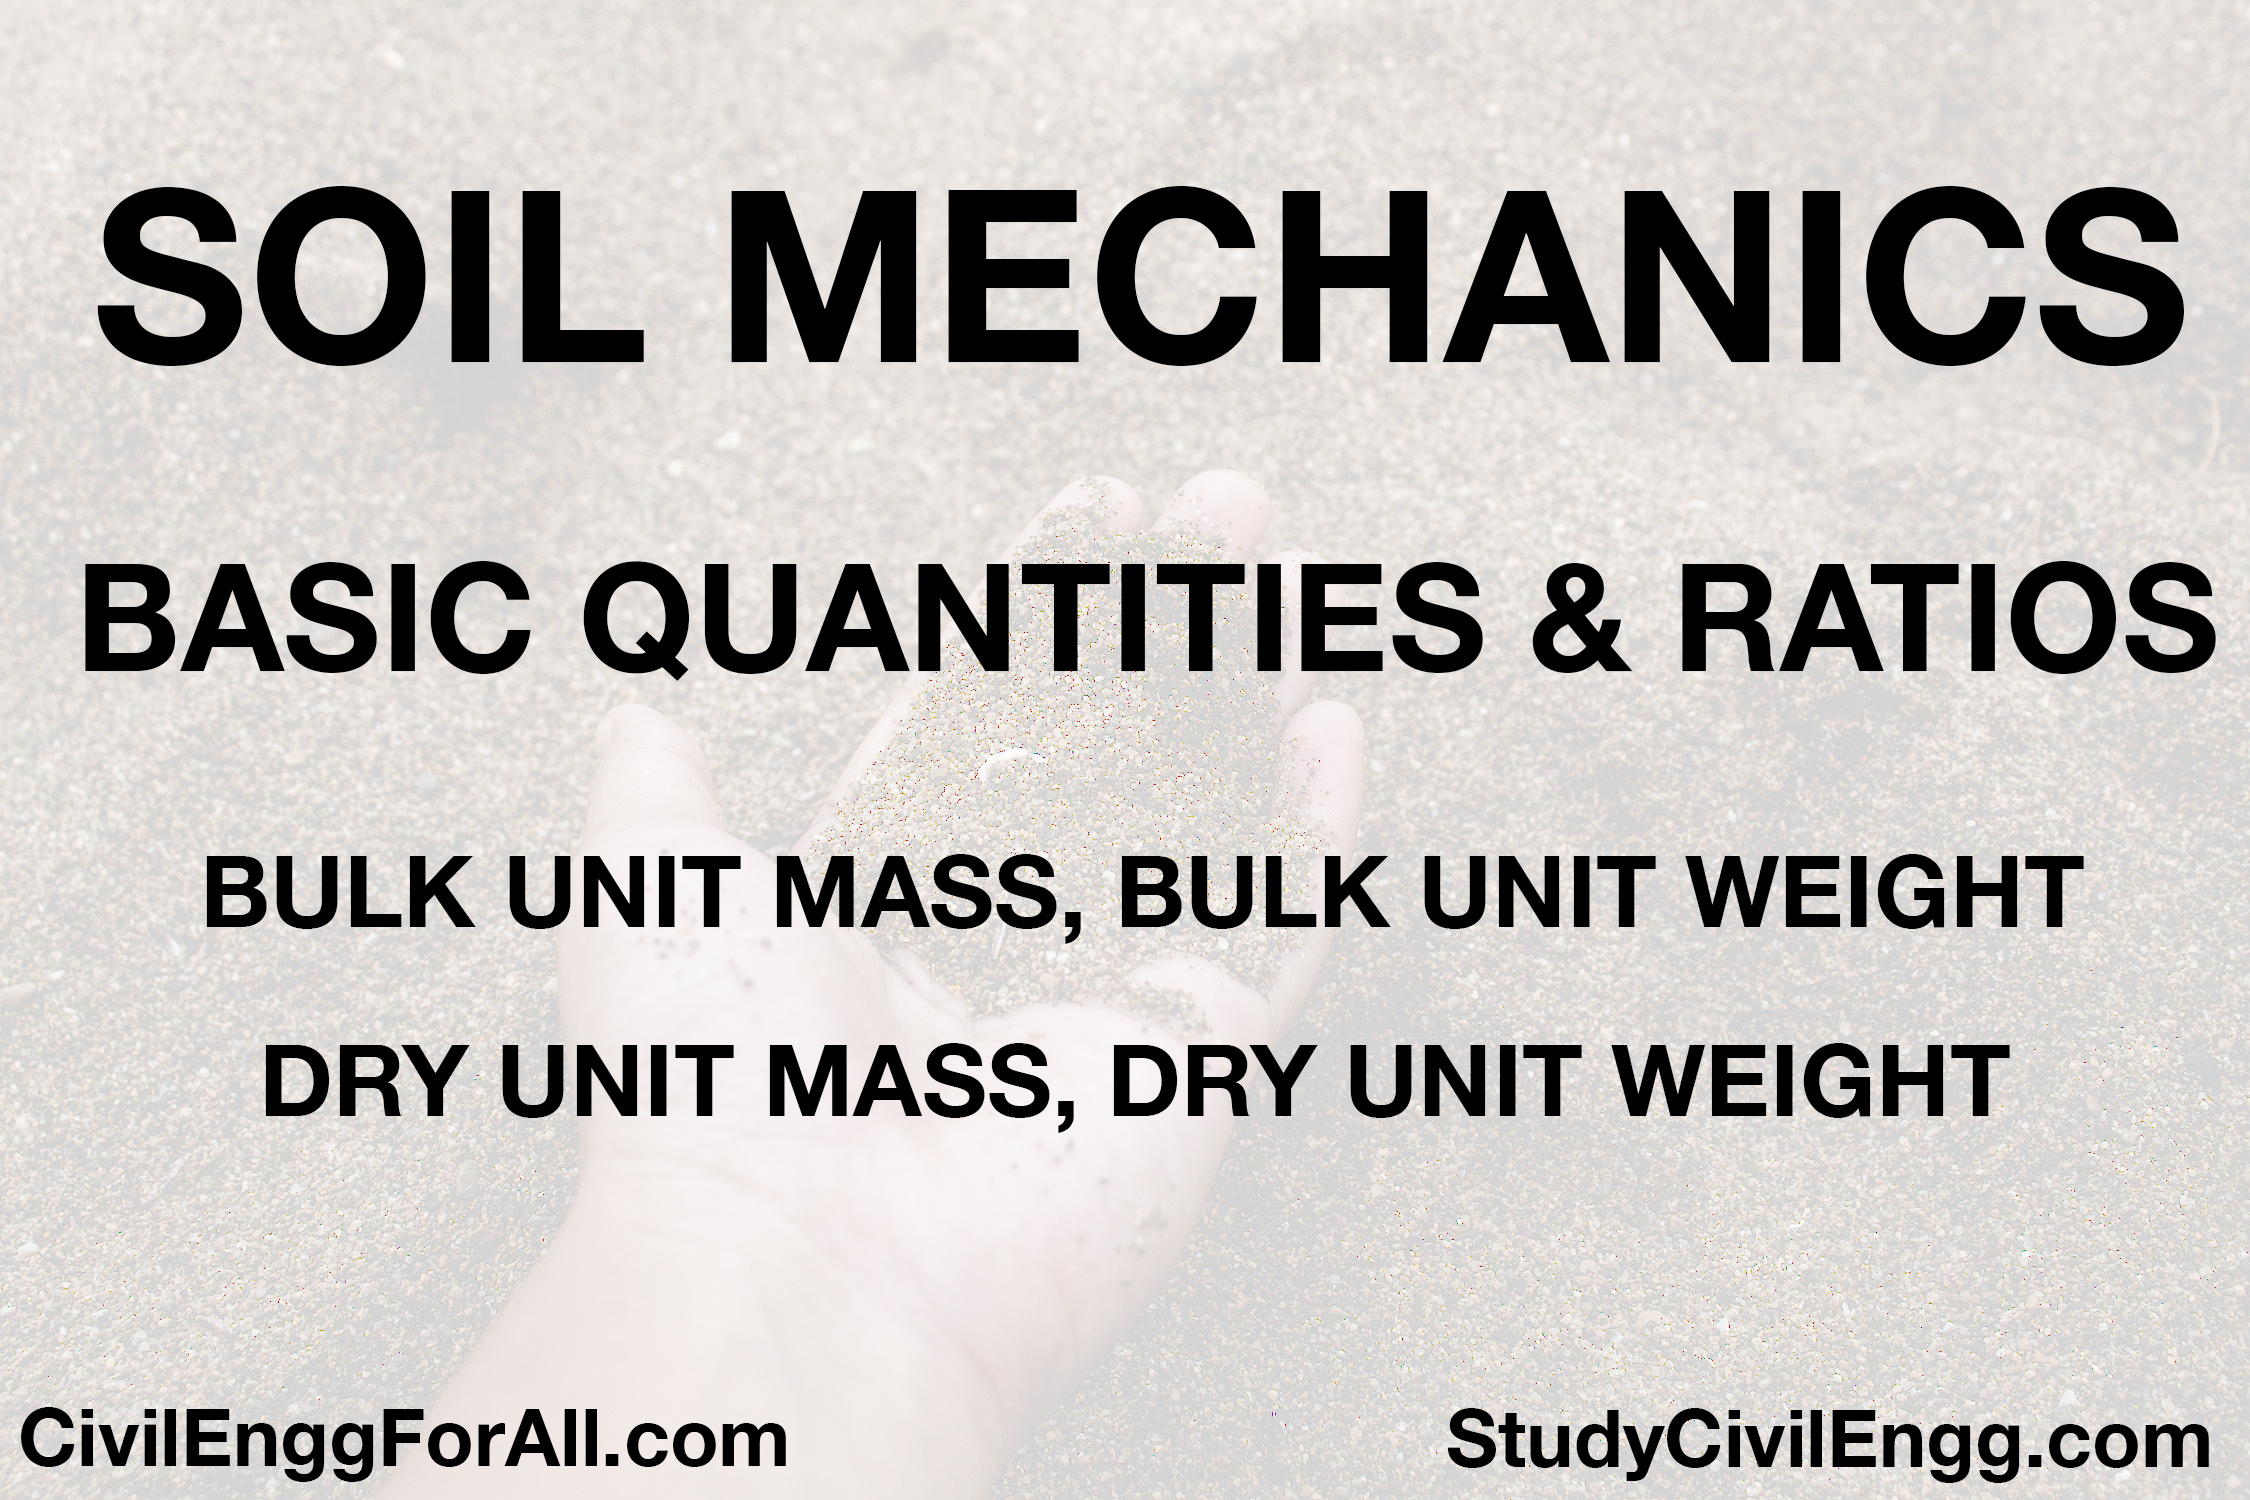 Bulk Unit Mass, Bulk Unit Weight, Dry Unit Mass, Dry Unit Weight - Soil Mechanics - StudyCivilEngg